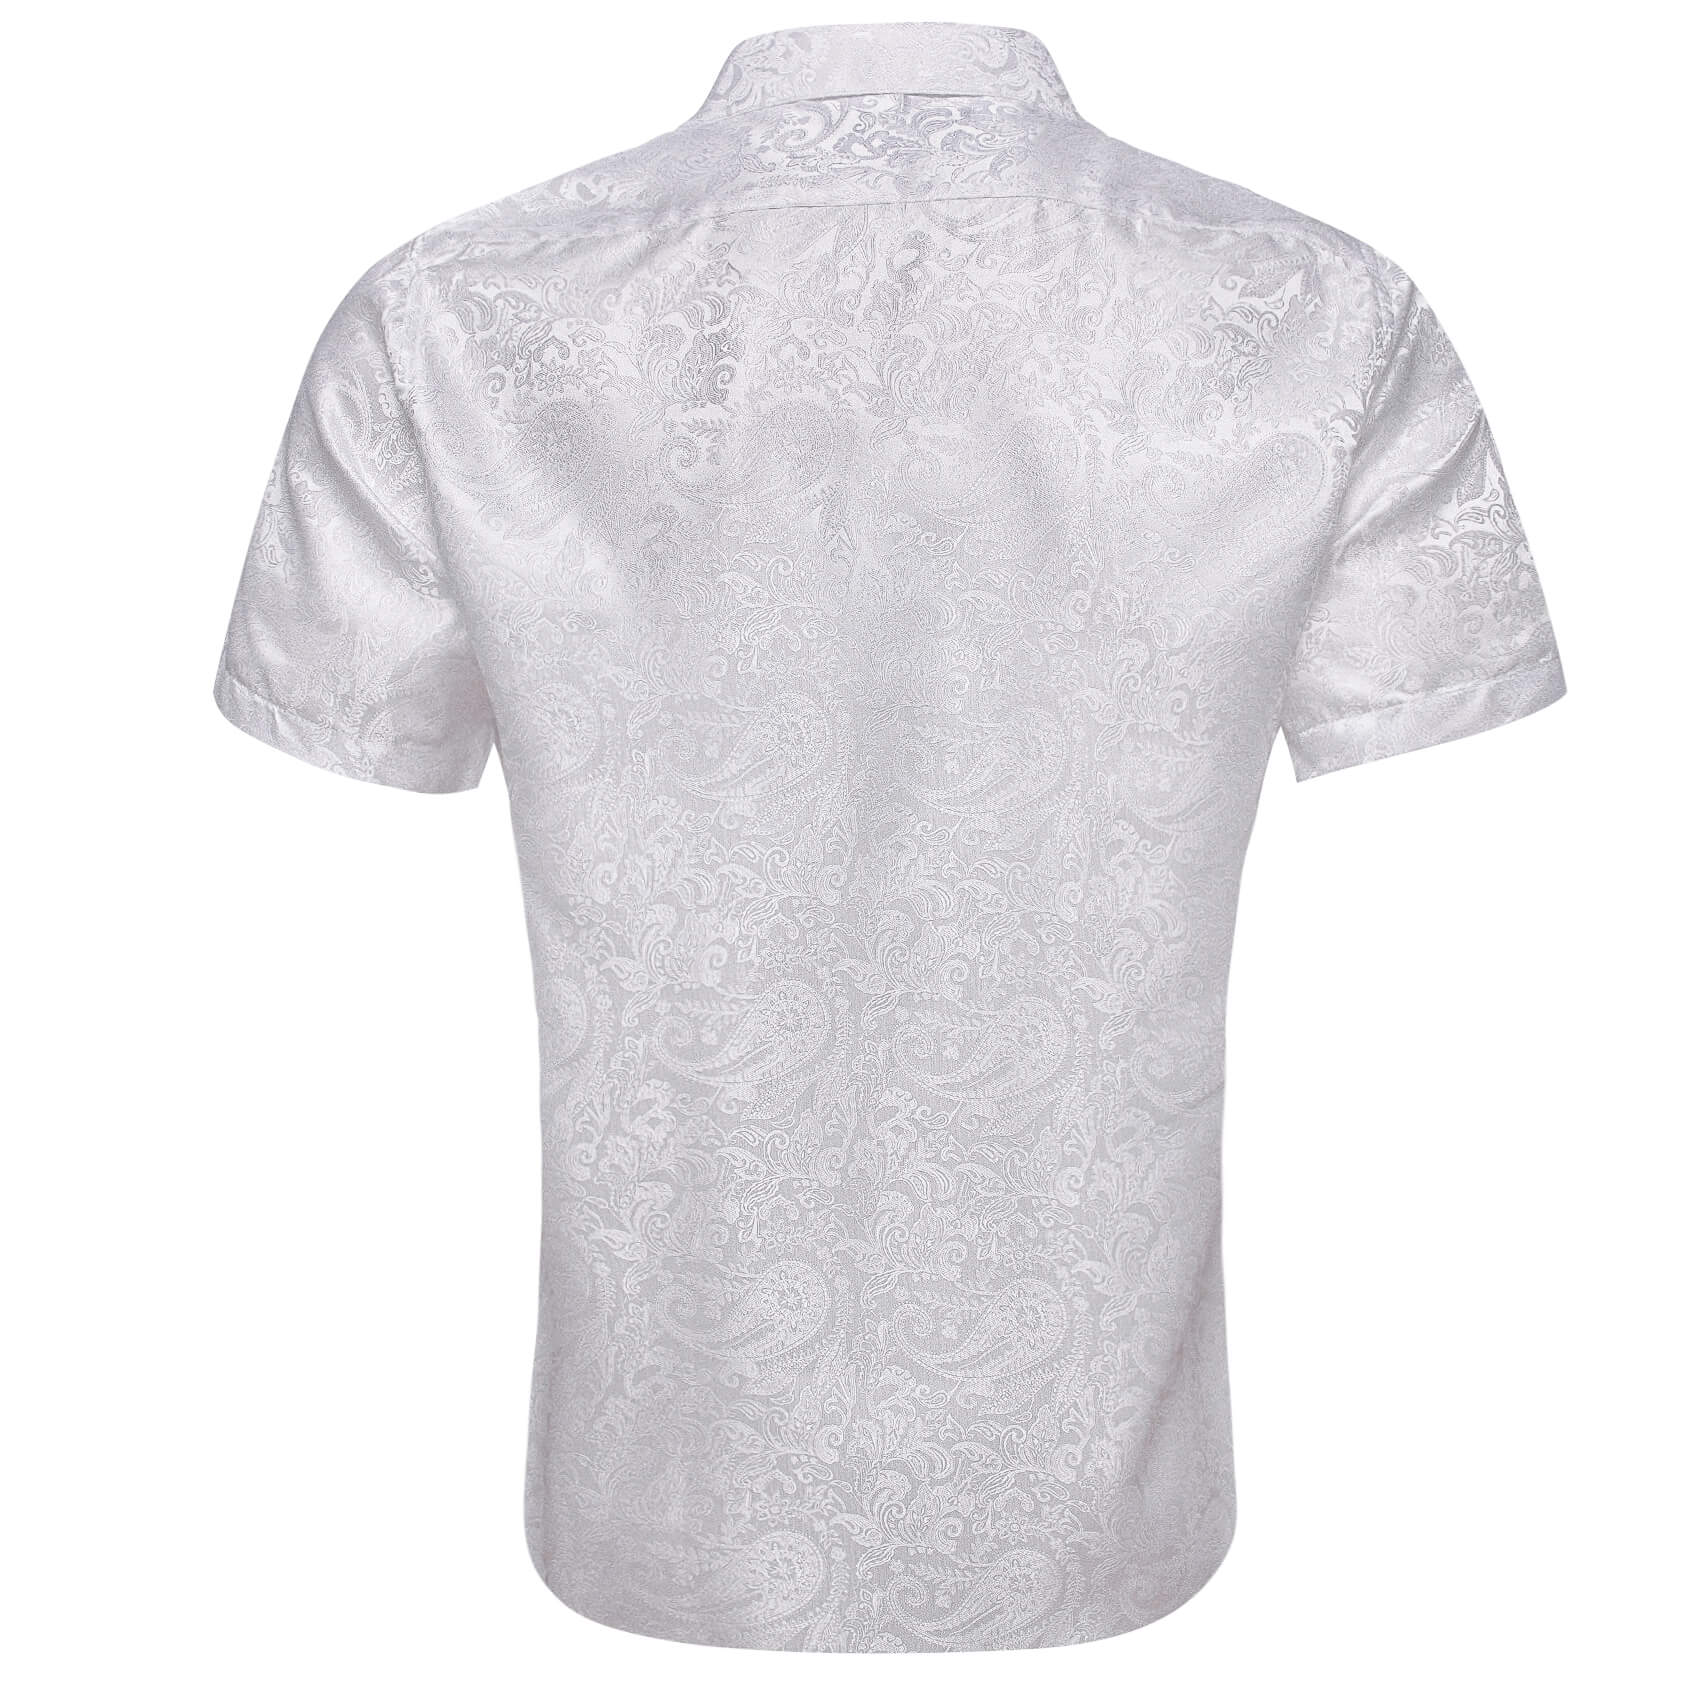  Short Sleeve Shirt Jacquard Paisley White Shirt paisley pattern shirts